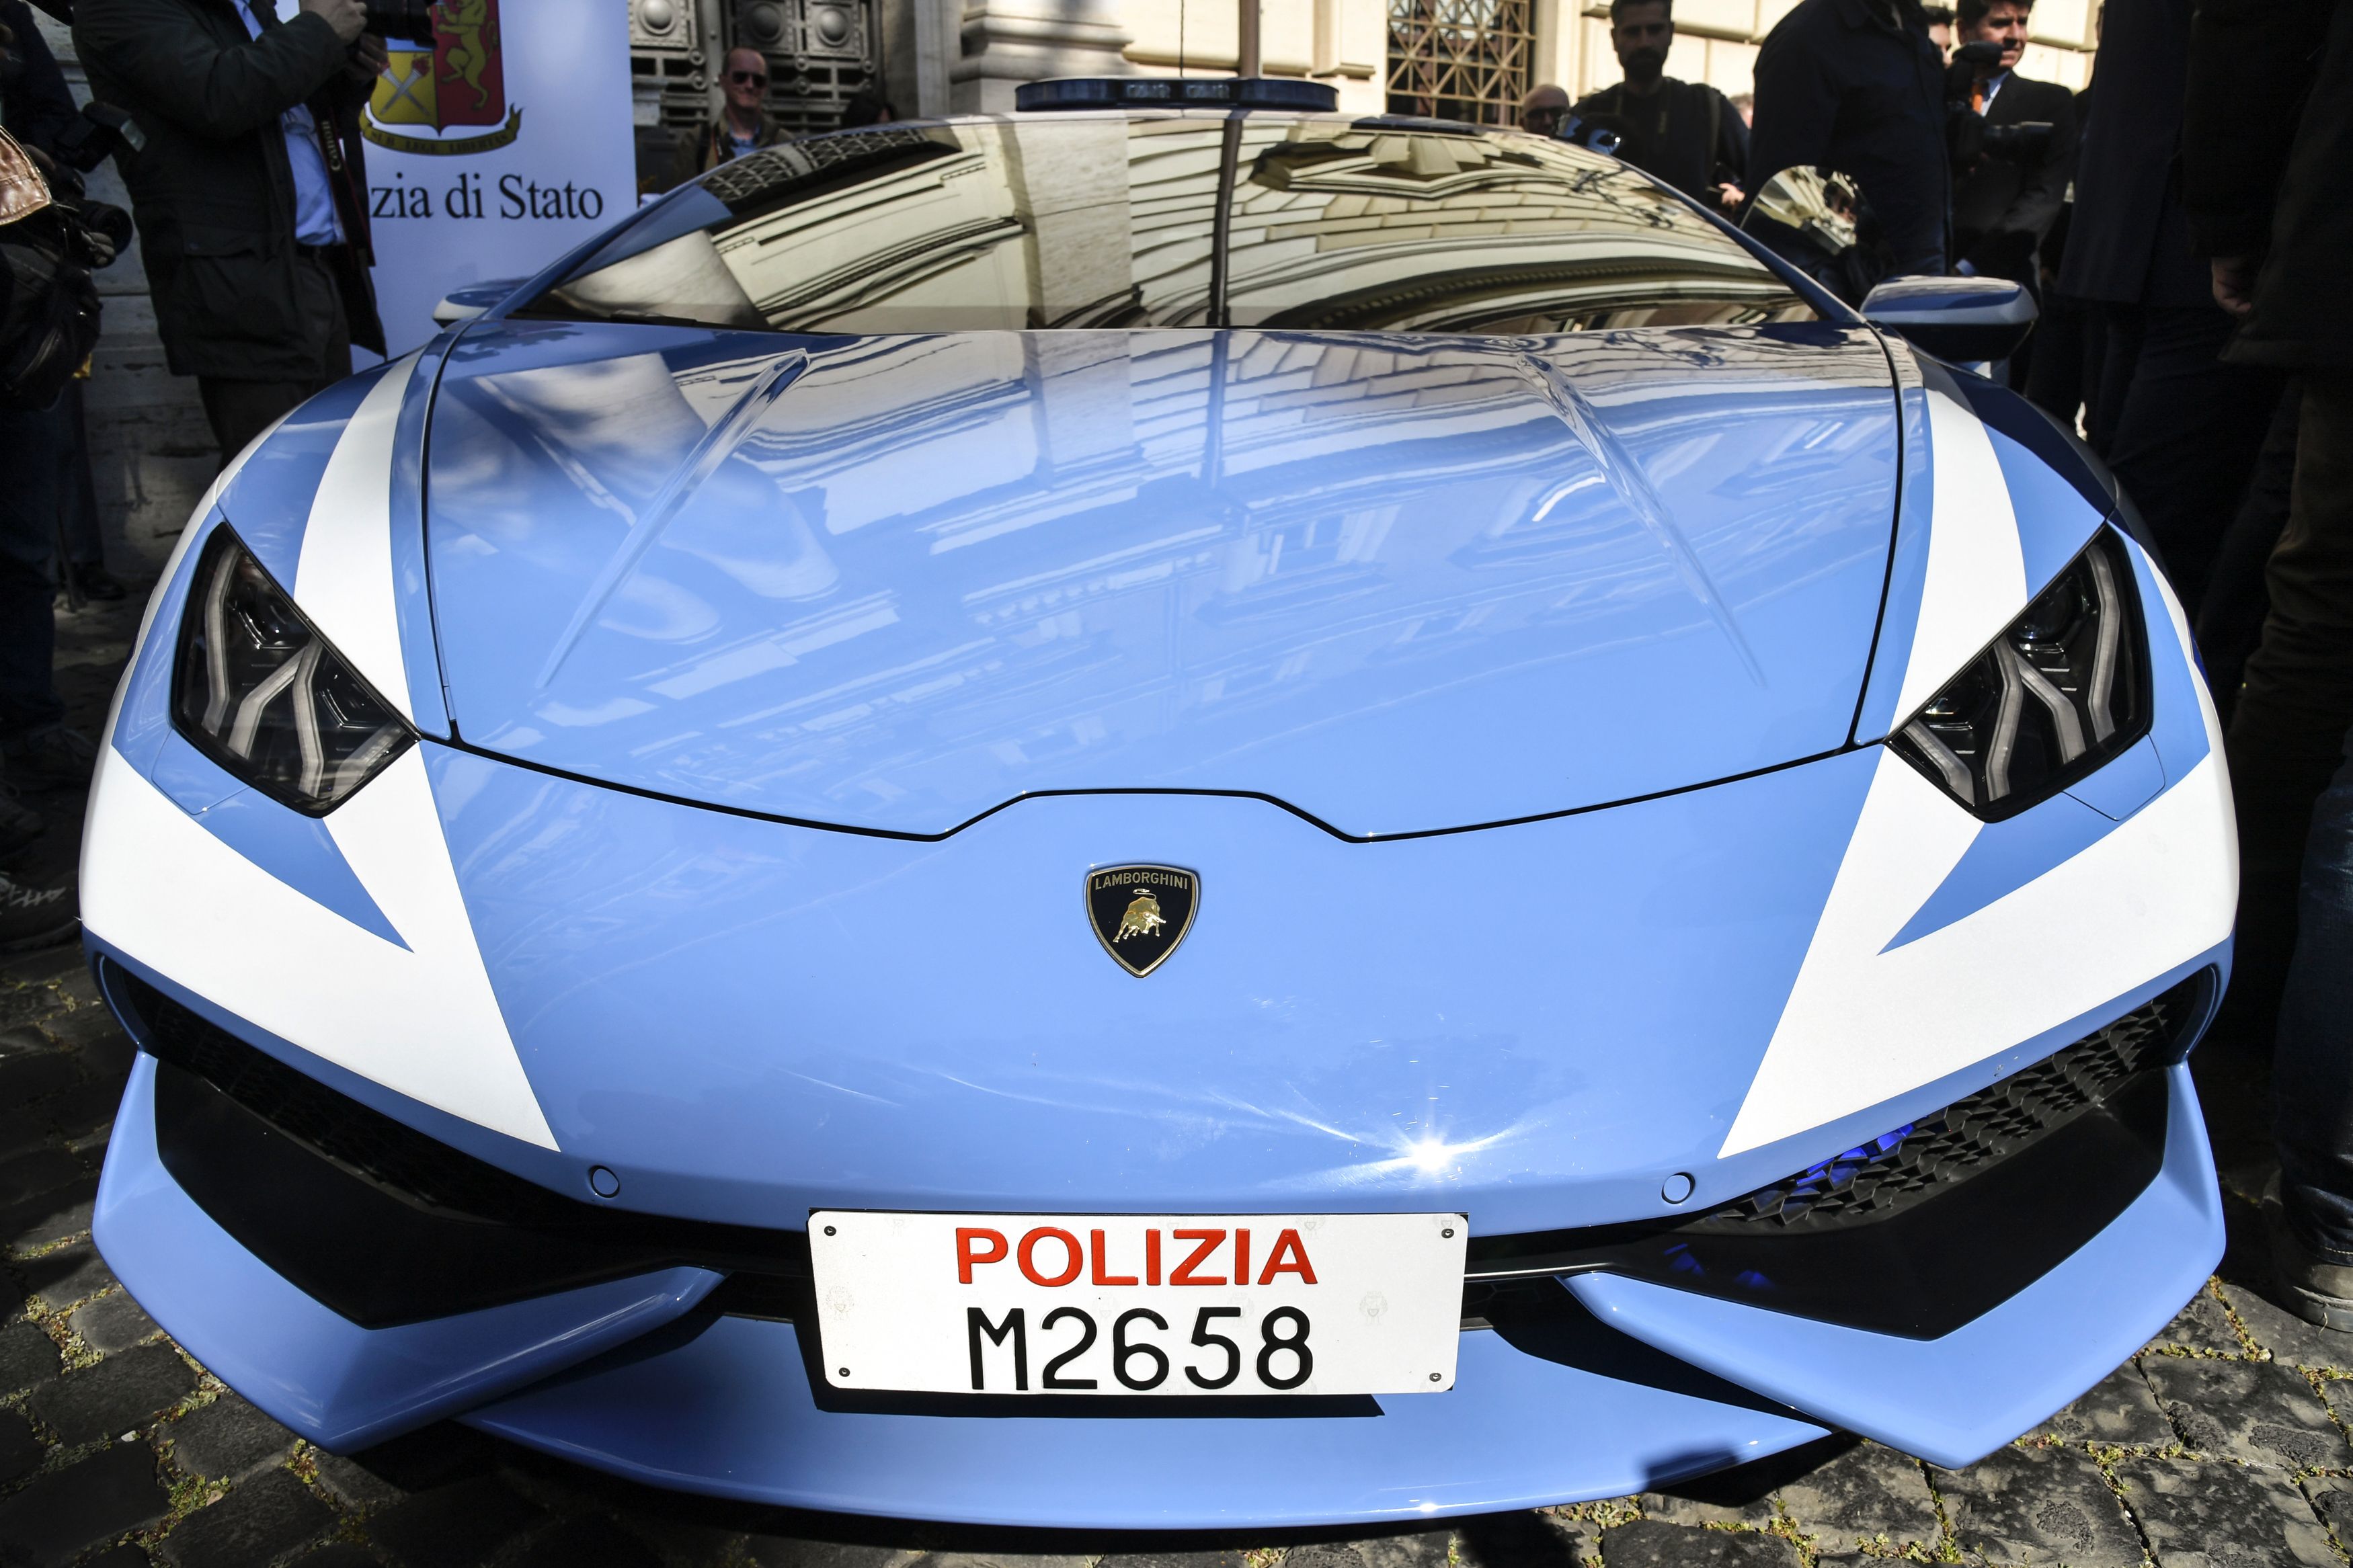 Meet Italy's 200 mph crimefighter: A Lamborghini - CNN Style